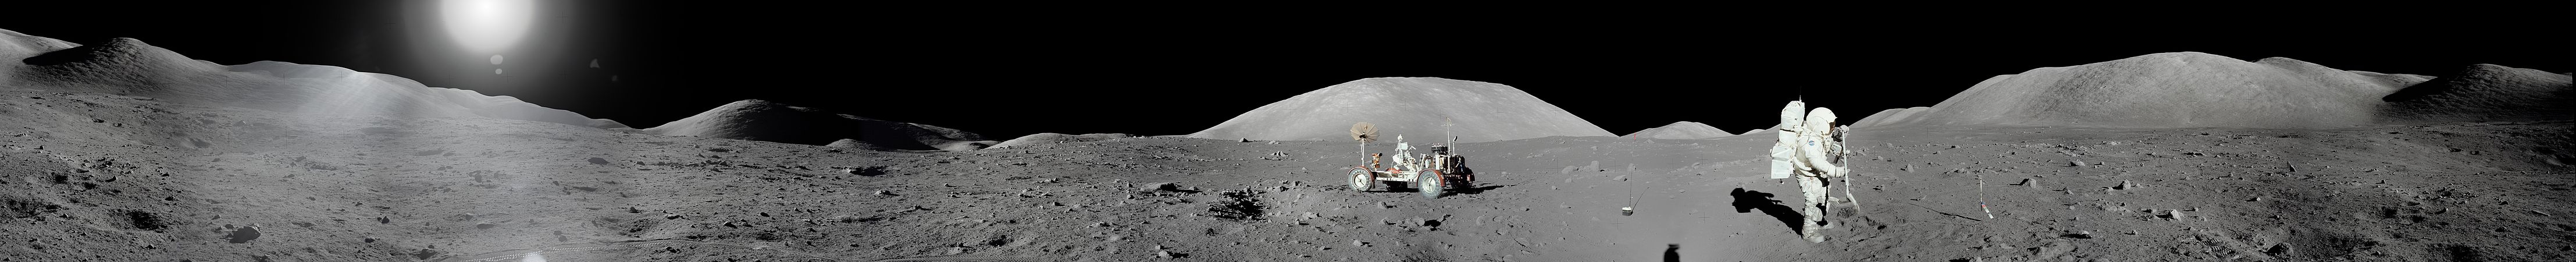 Apollo 17 Moon Panorama.jpg